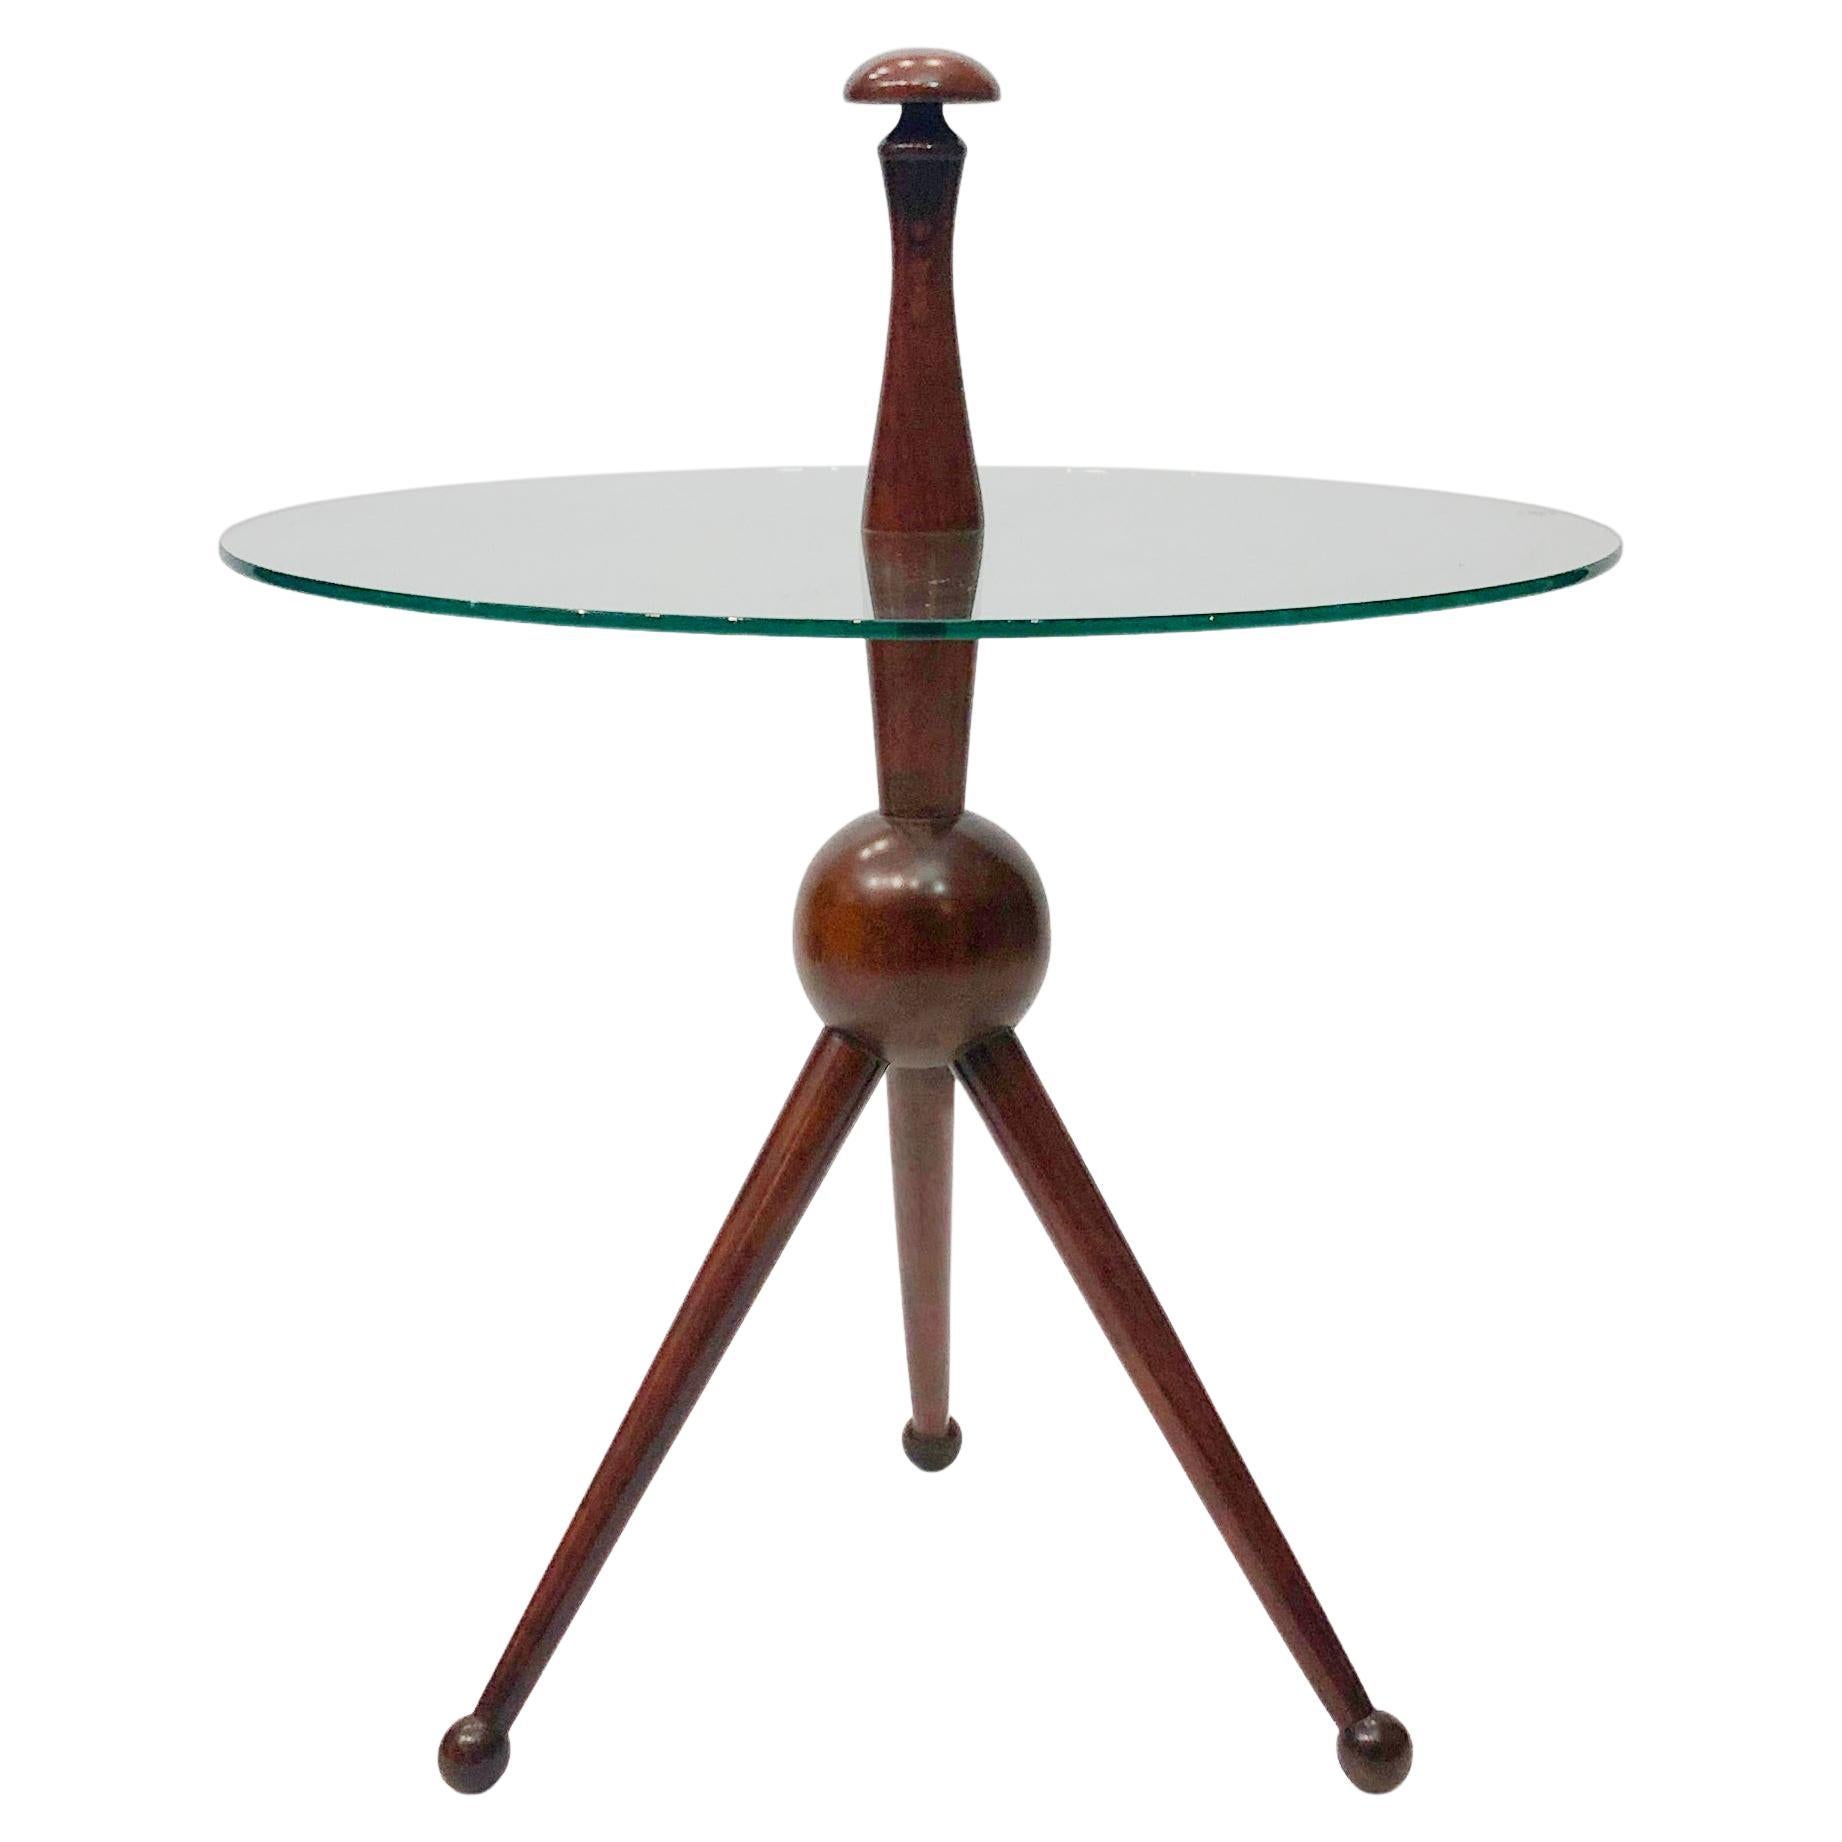 Cesare Lacca Tripod Side Table #1 1950s Midcentury Italian Vintage Wood Glass